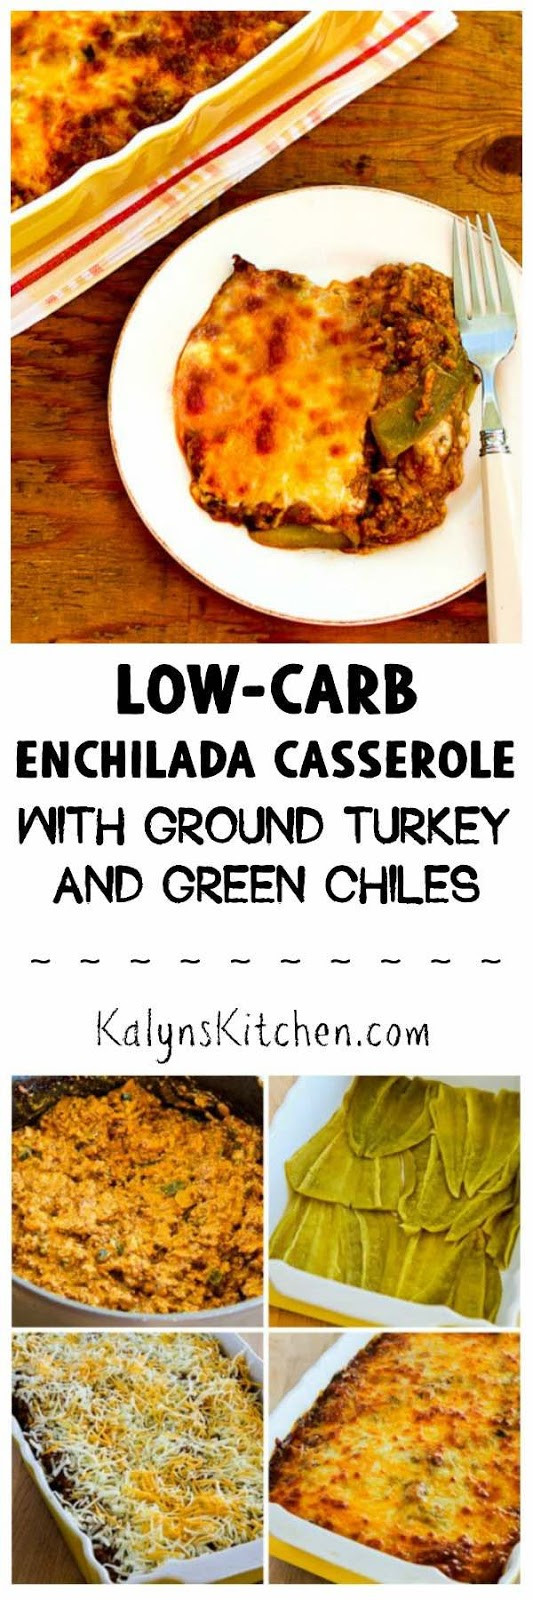 Low Carb Turkey Casserole
 Kalyn s Kitchen Low Carb Enchilada Casserole with Ground